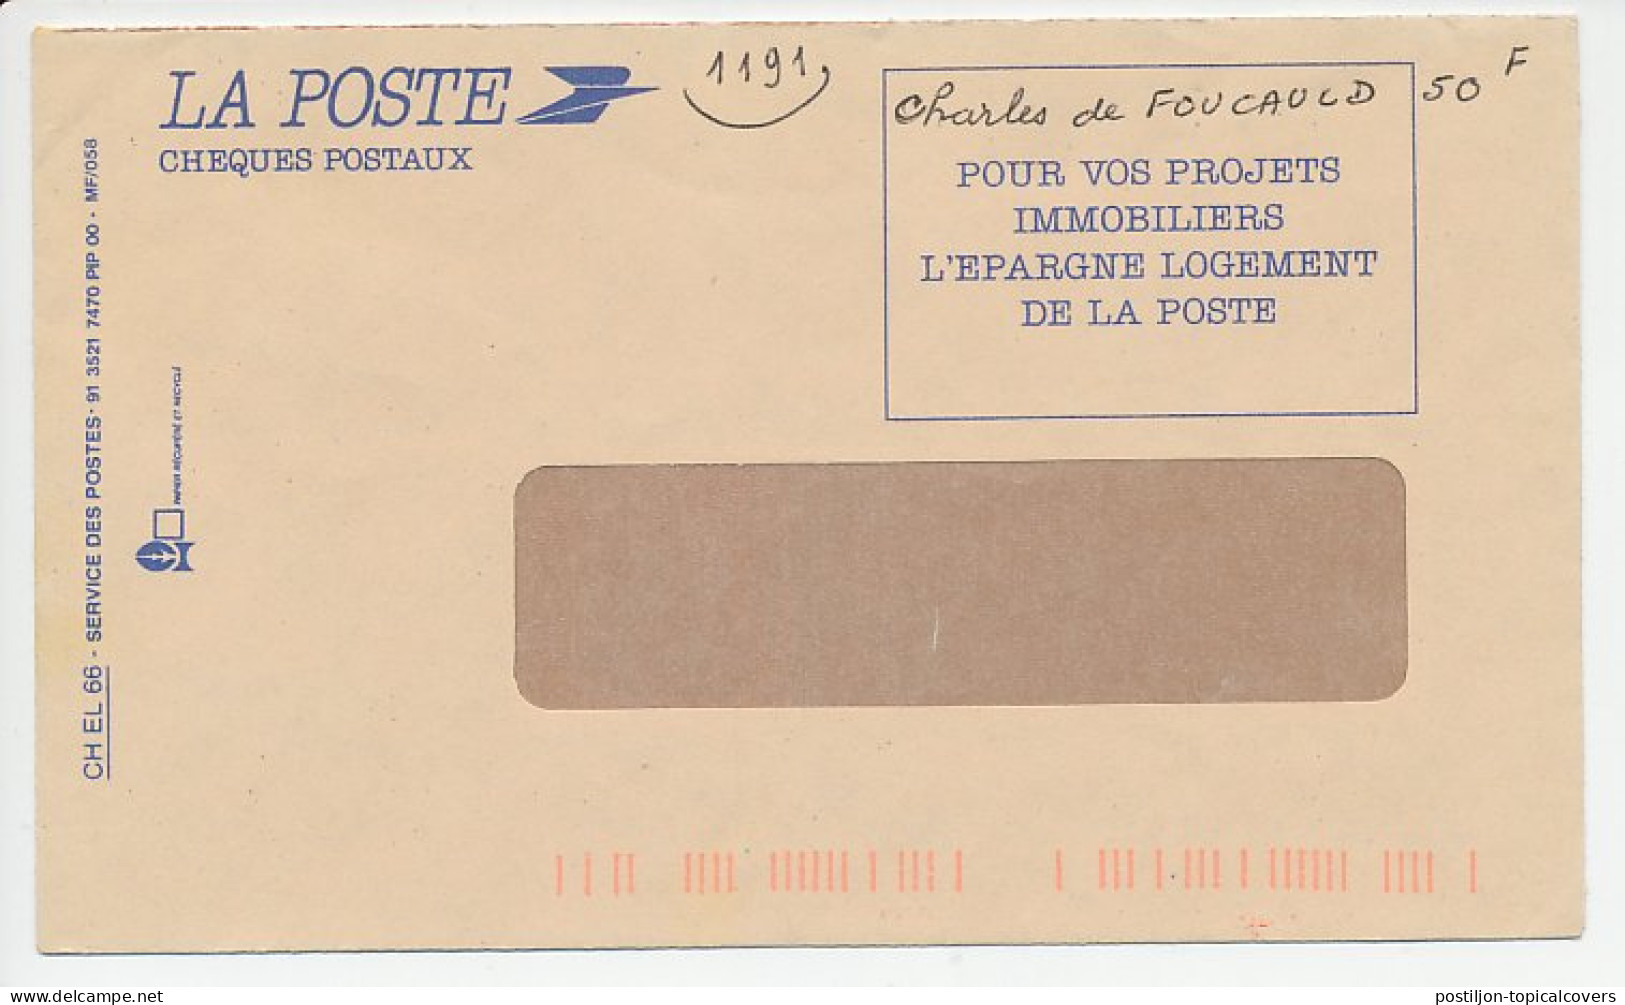 Postal Cheque Cover France 1991 Phone Card - Alumni - Combatants - War Victims - Telecom